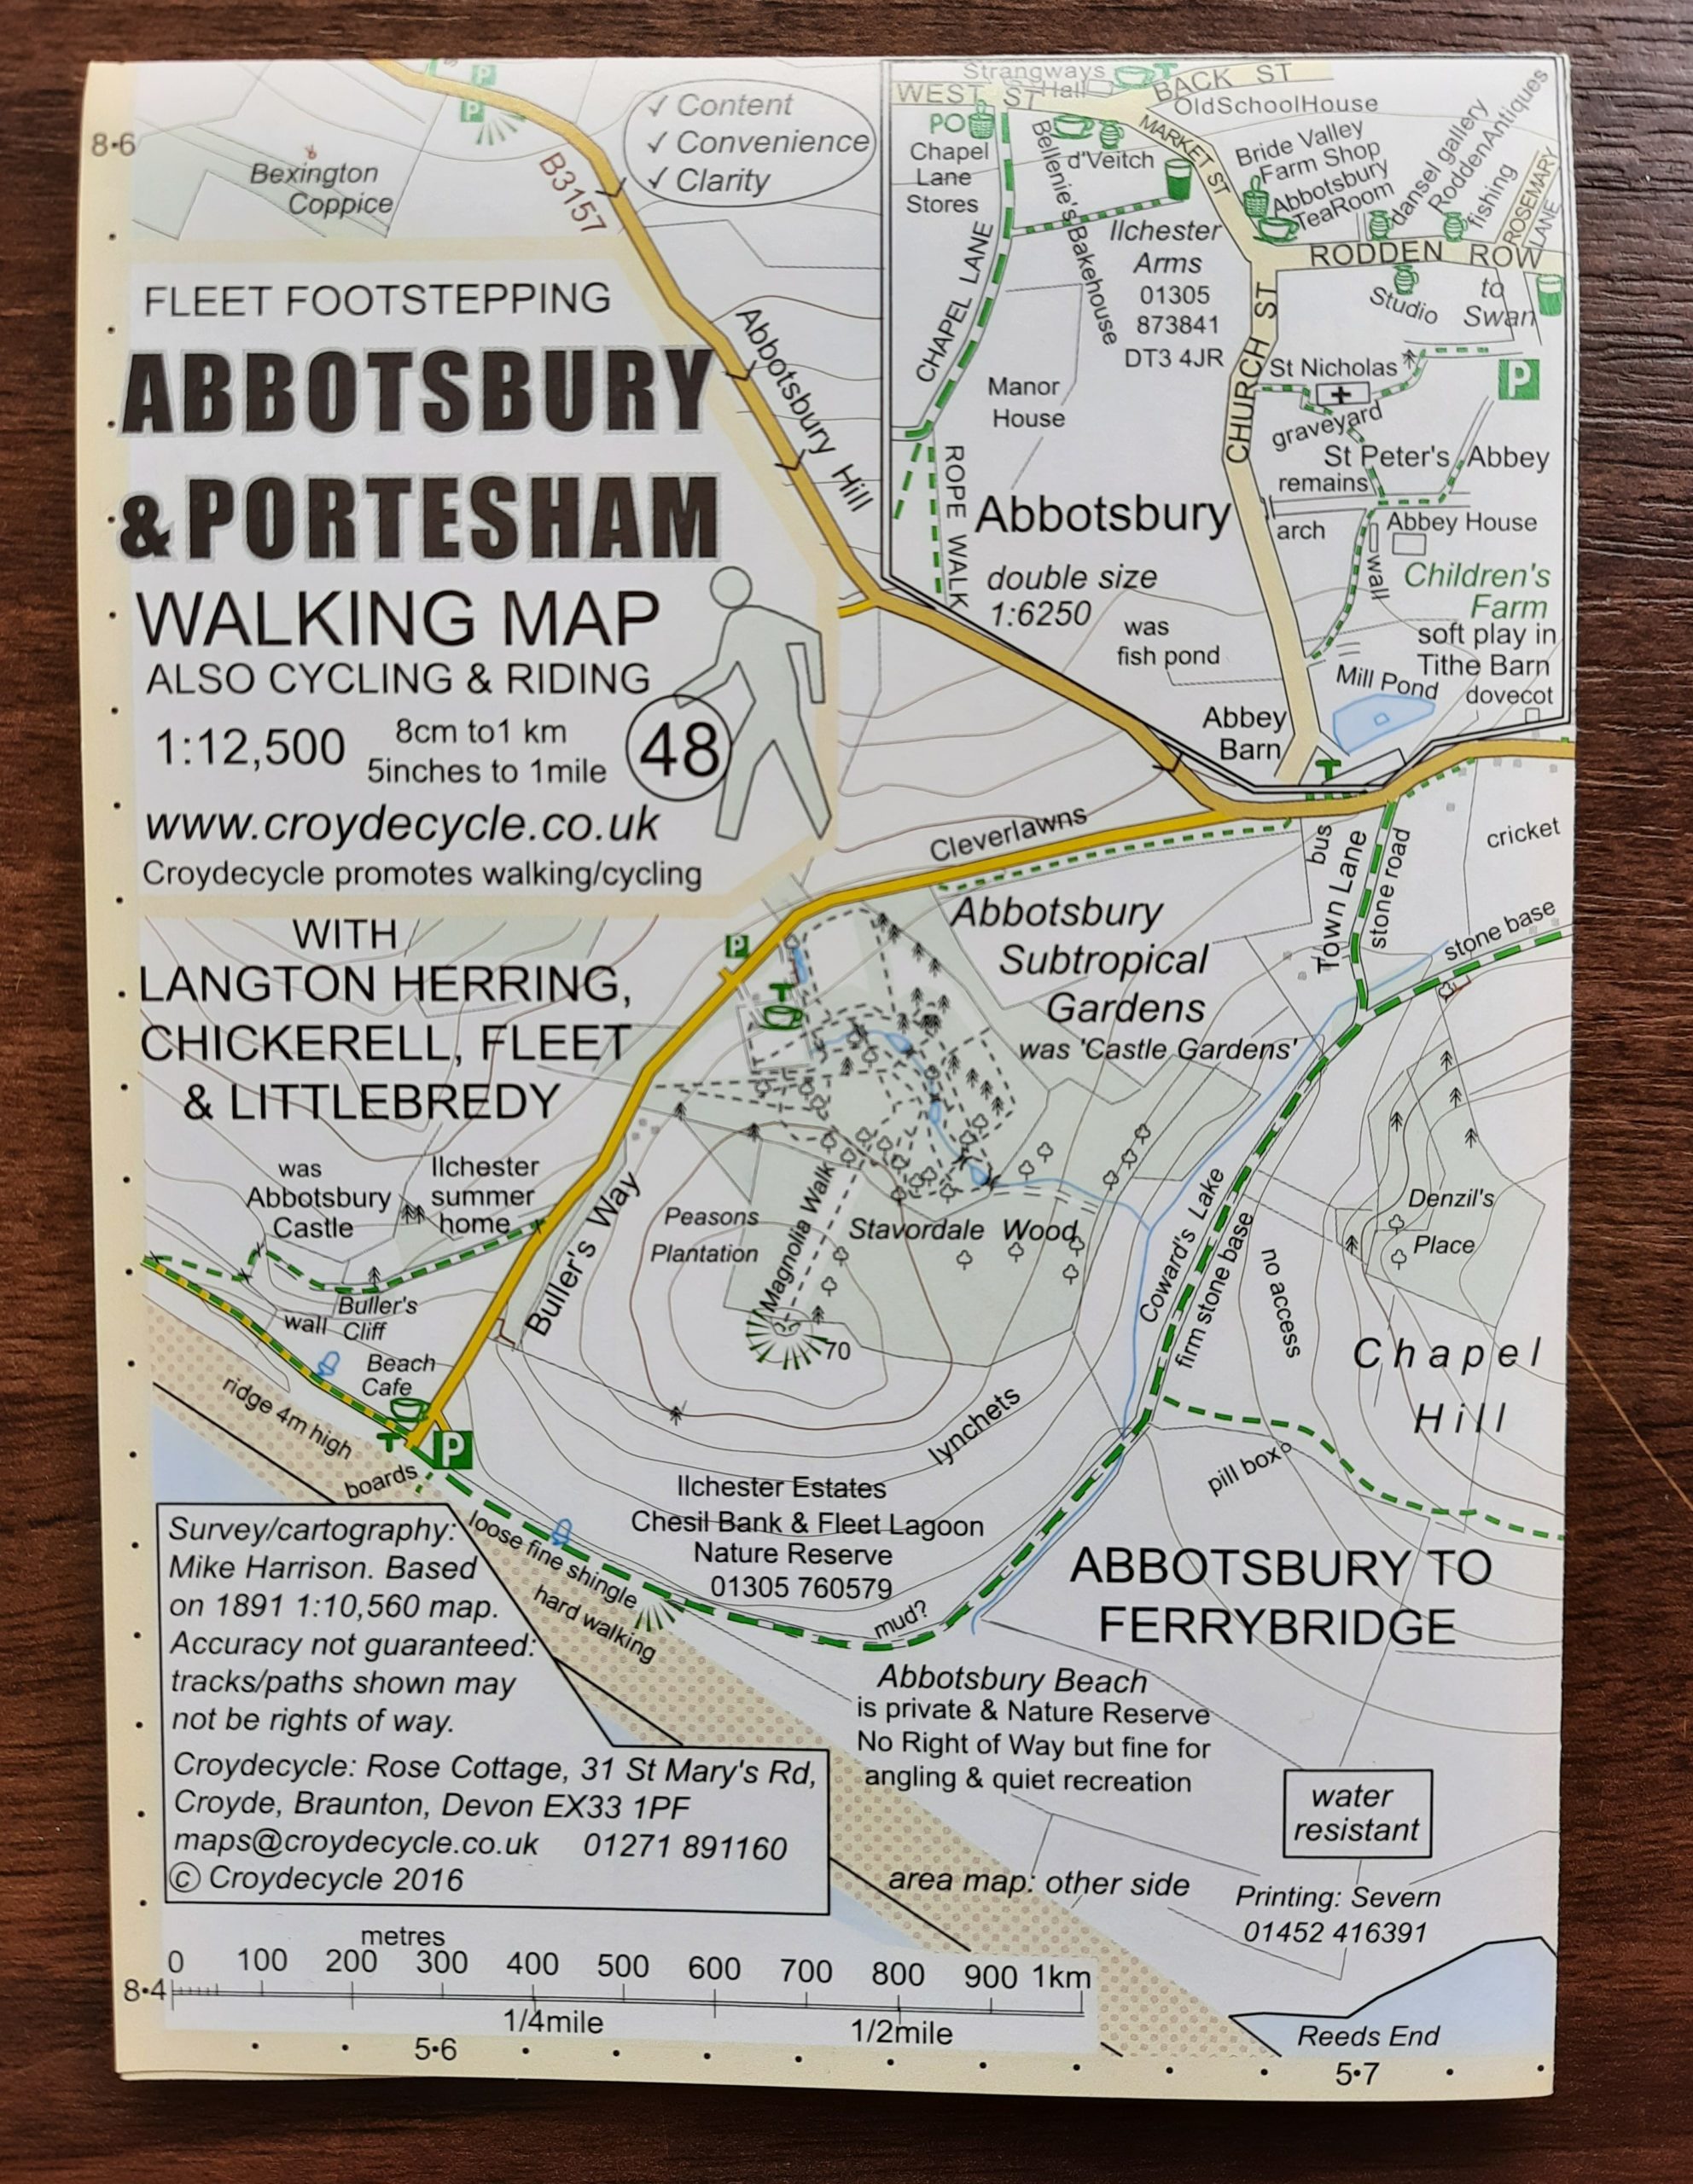 Abbotsbury & Portesham Walking Map